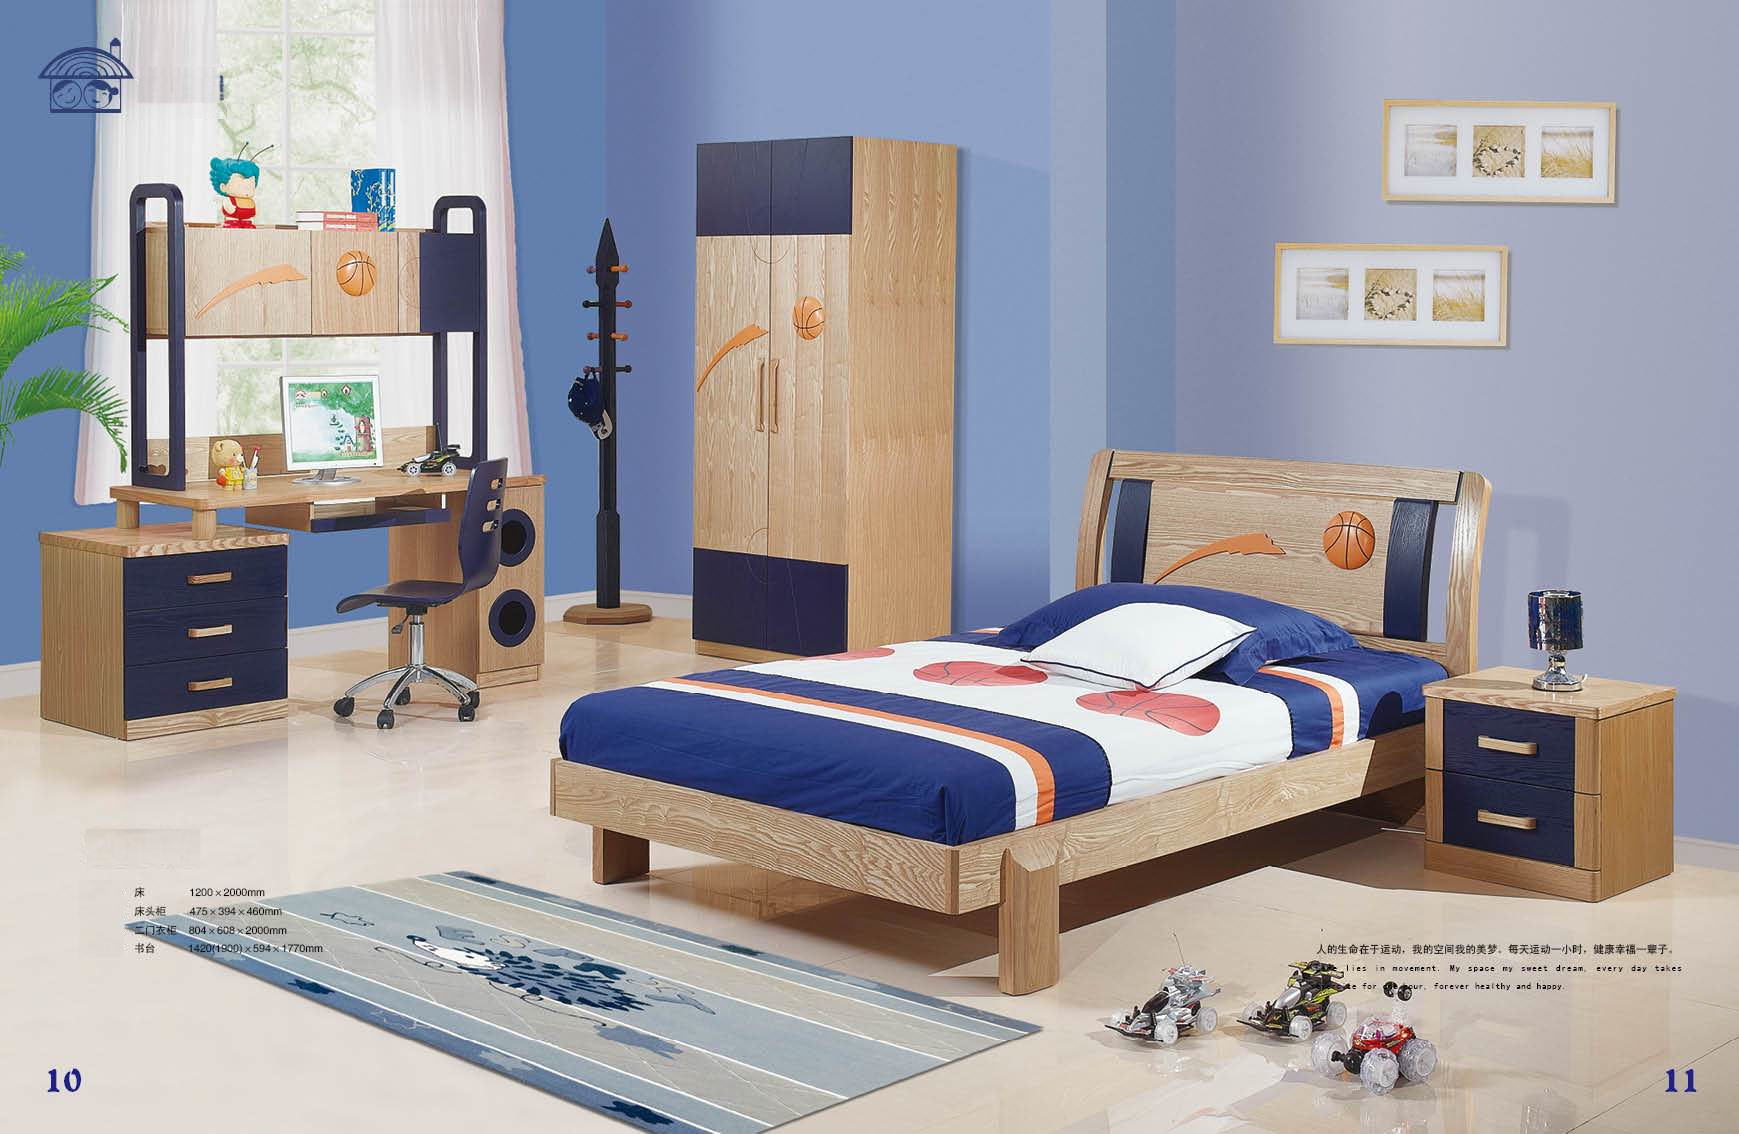 Luxury ... Kids Bedroom Furniture Sets Bedroom Kids Bedroom Furniture Sets For Boys kids bedroom furniture sets for boys